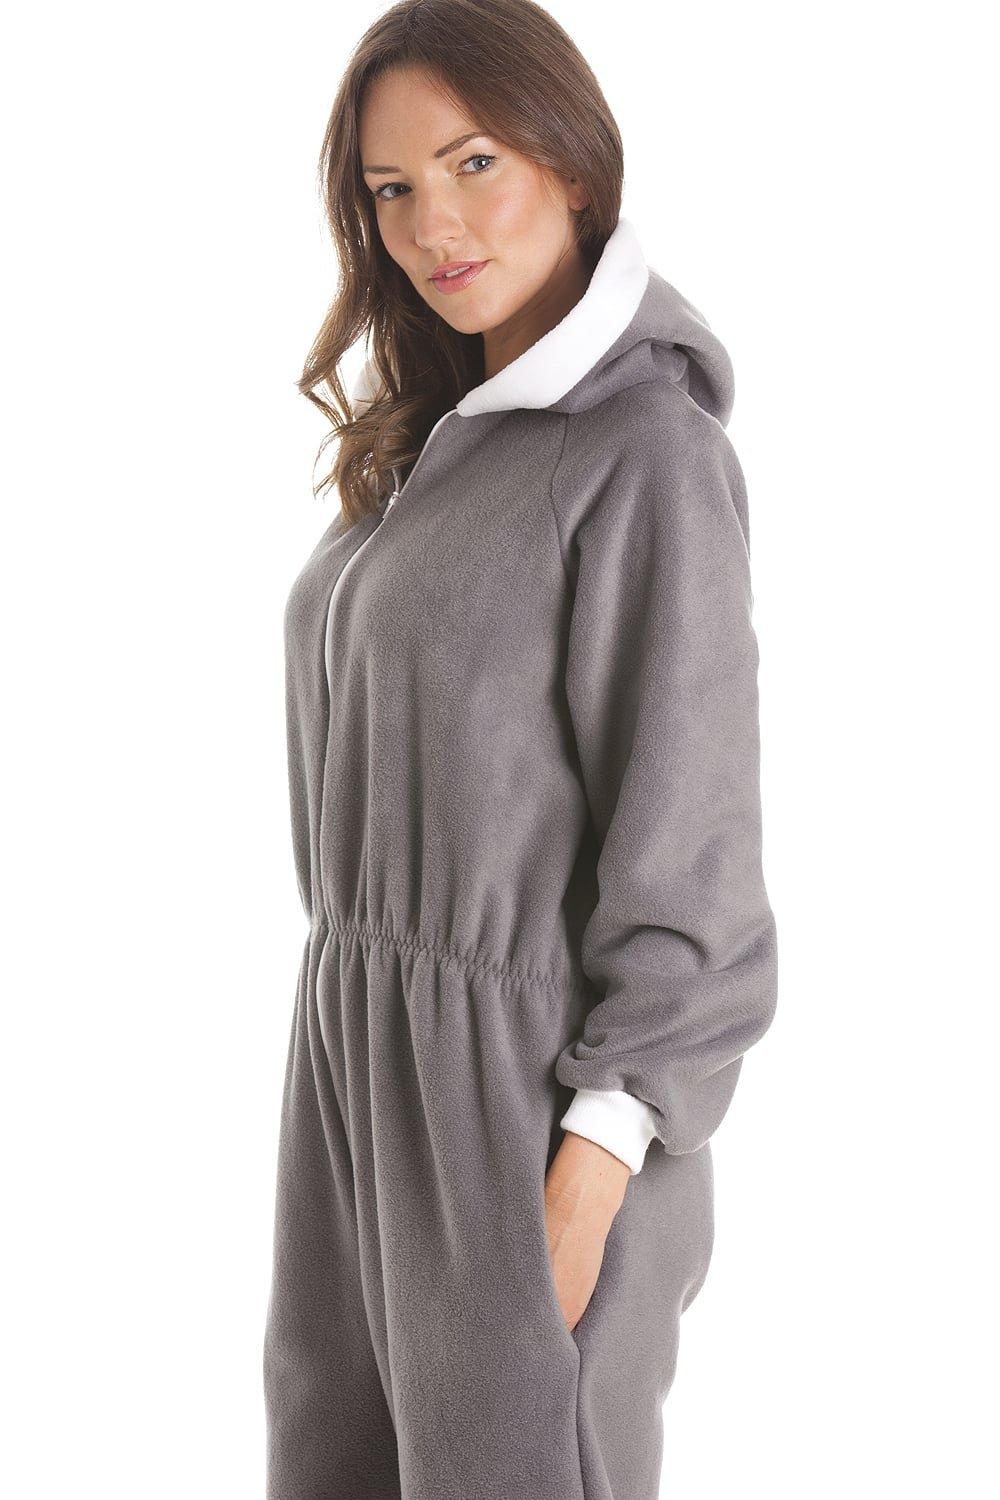 Camille Womens Ladies Luxury SuperSoft Fleece Hooded Grey Pyjama